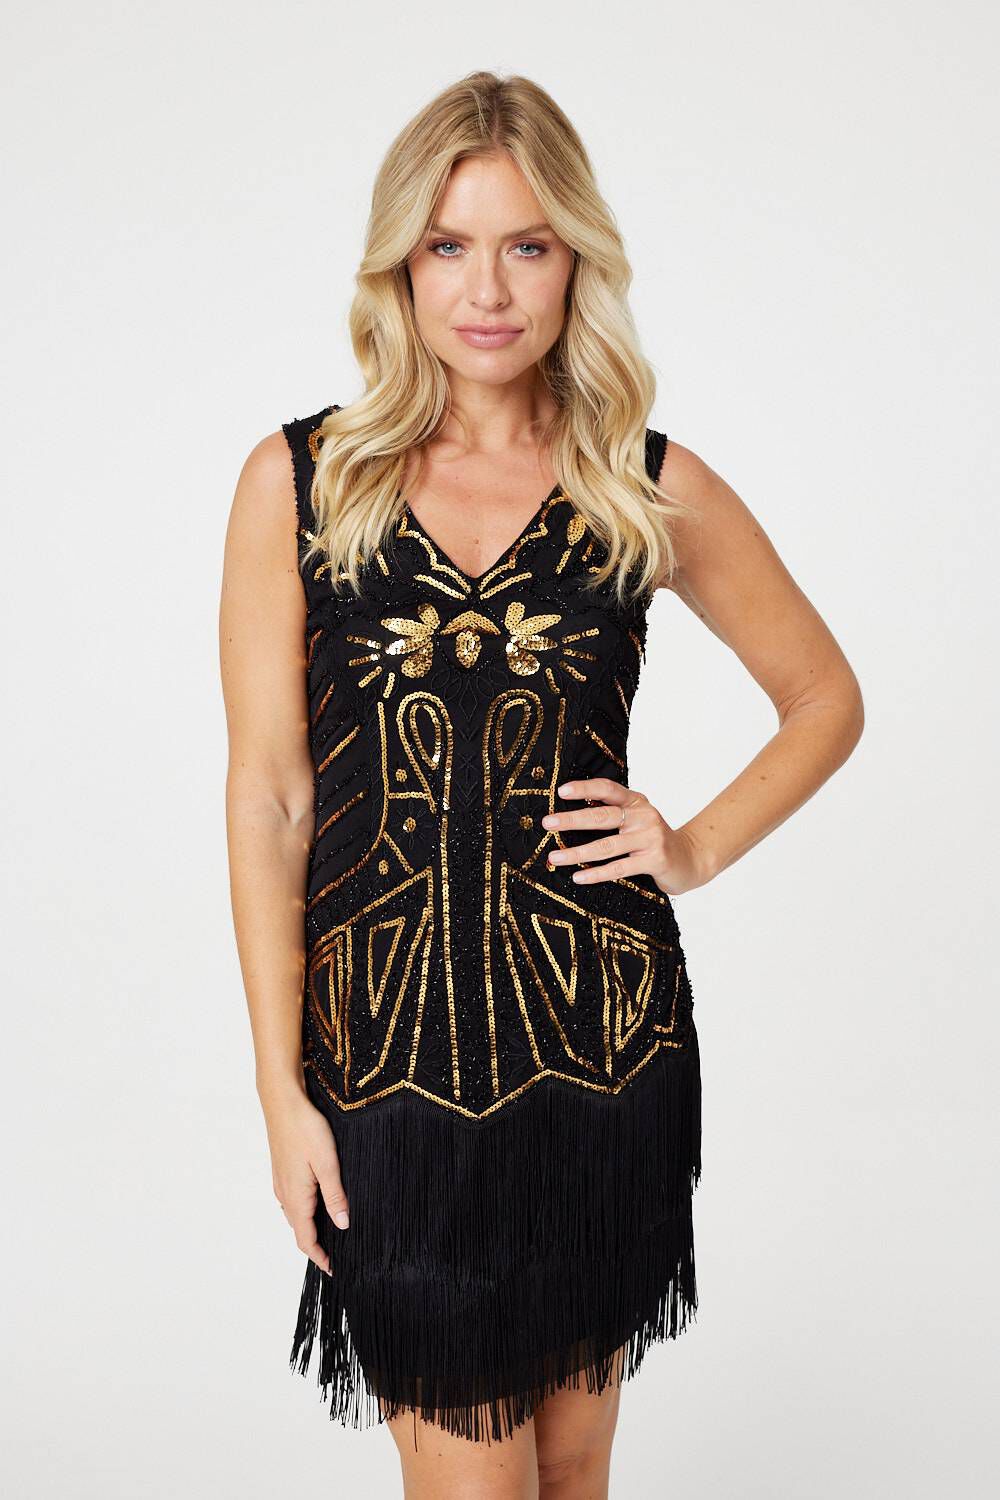 Izabel London Women’s Black and Gold Sequin Sleeveless Short Dress, Size: 16